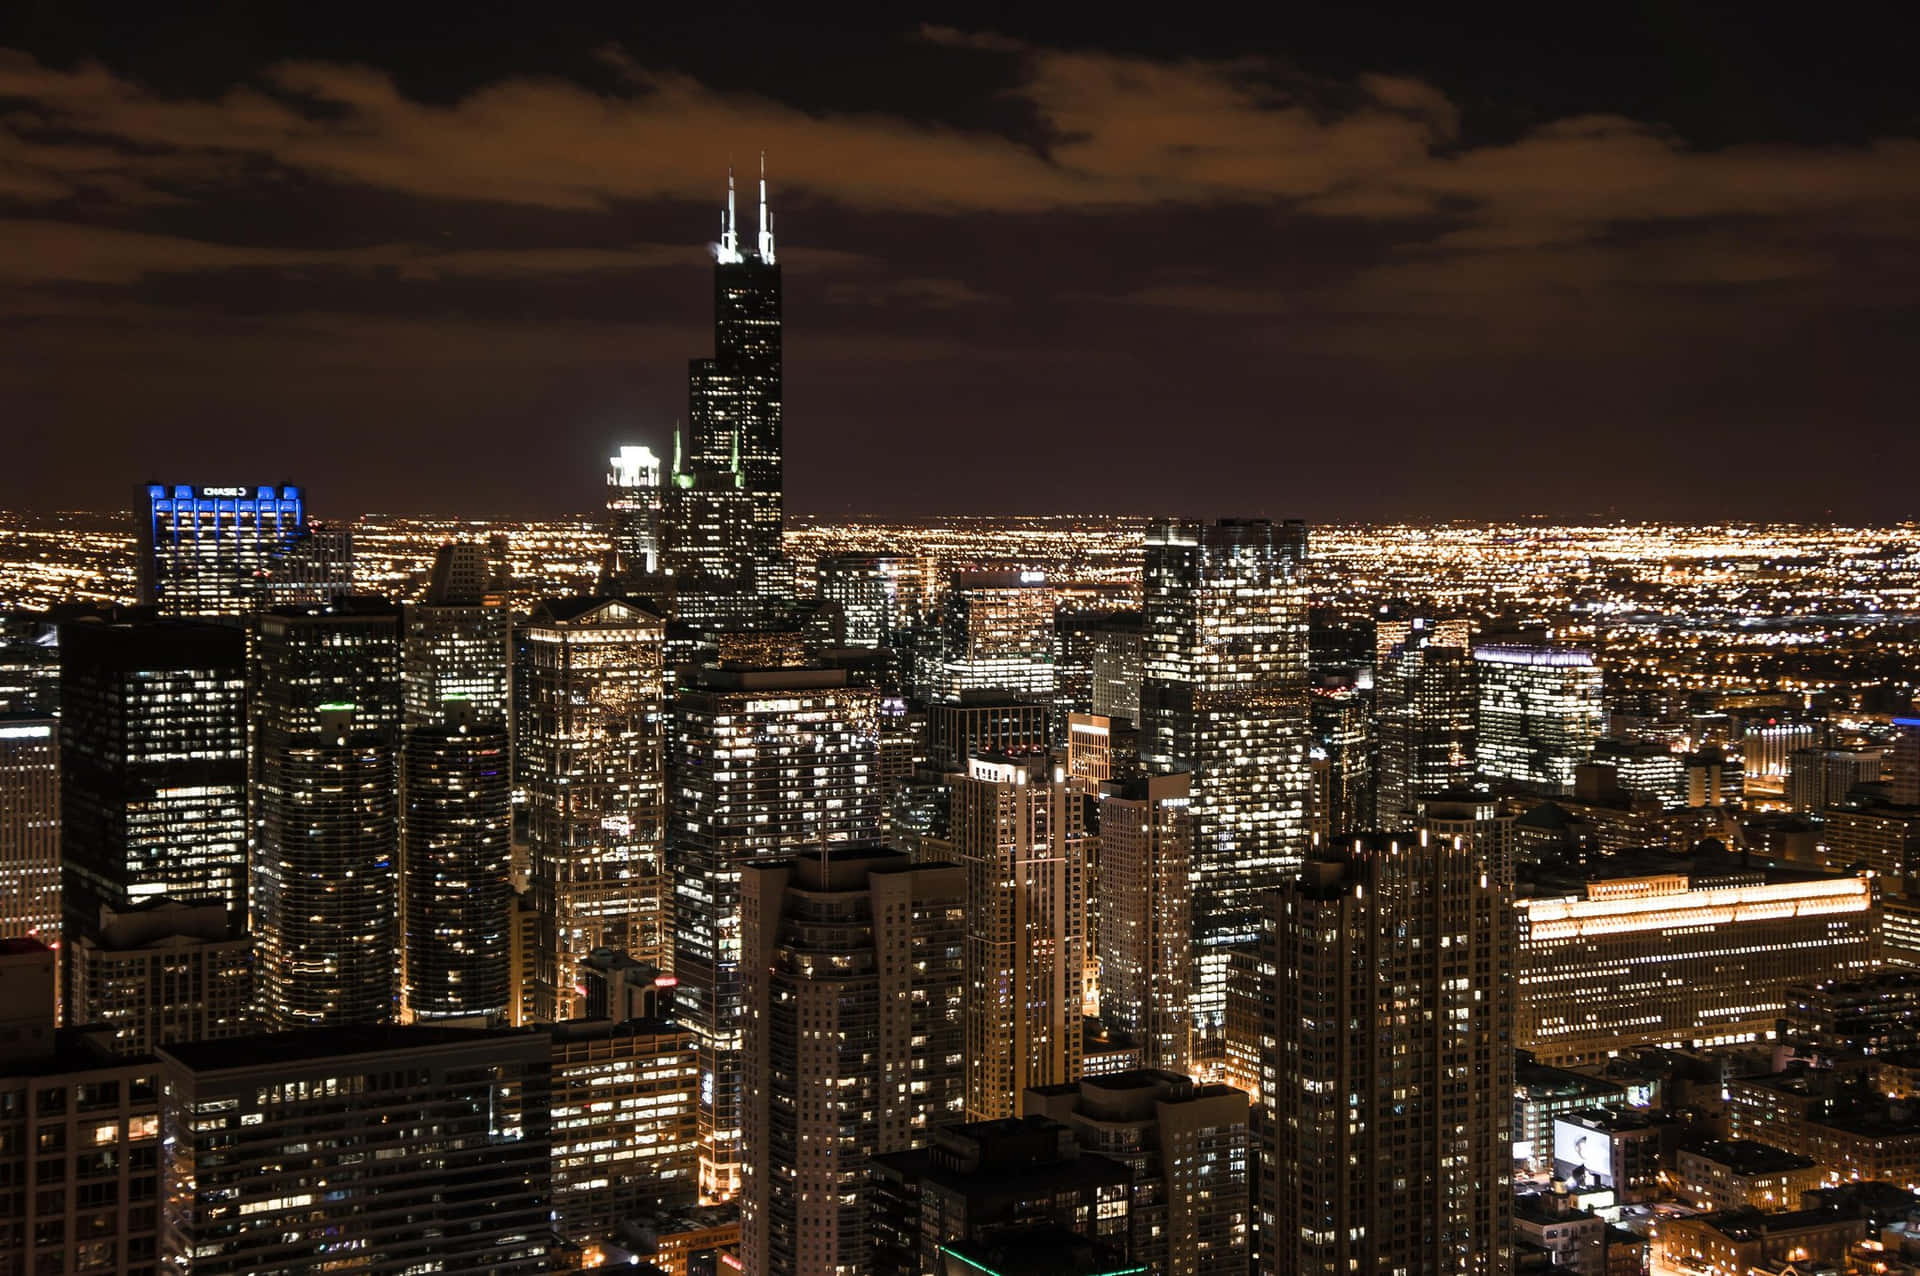 Englittrande Stad På Natten - Njut Av Skönheten I Centrala Chicago. Wallpaper